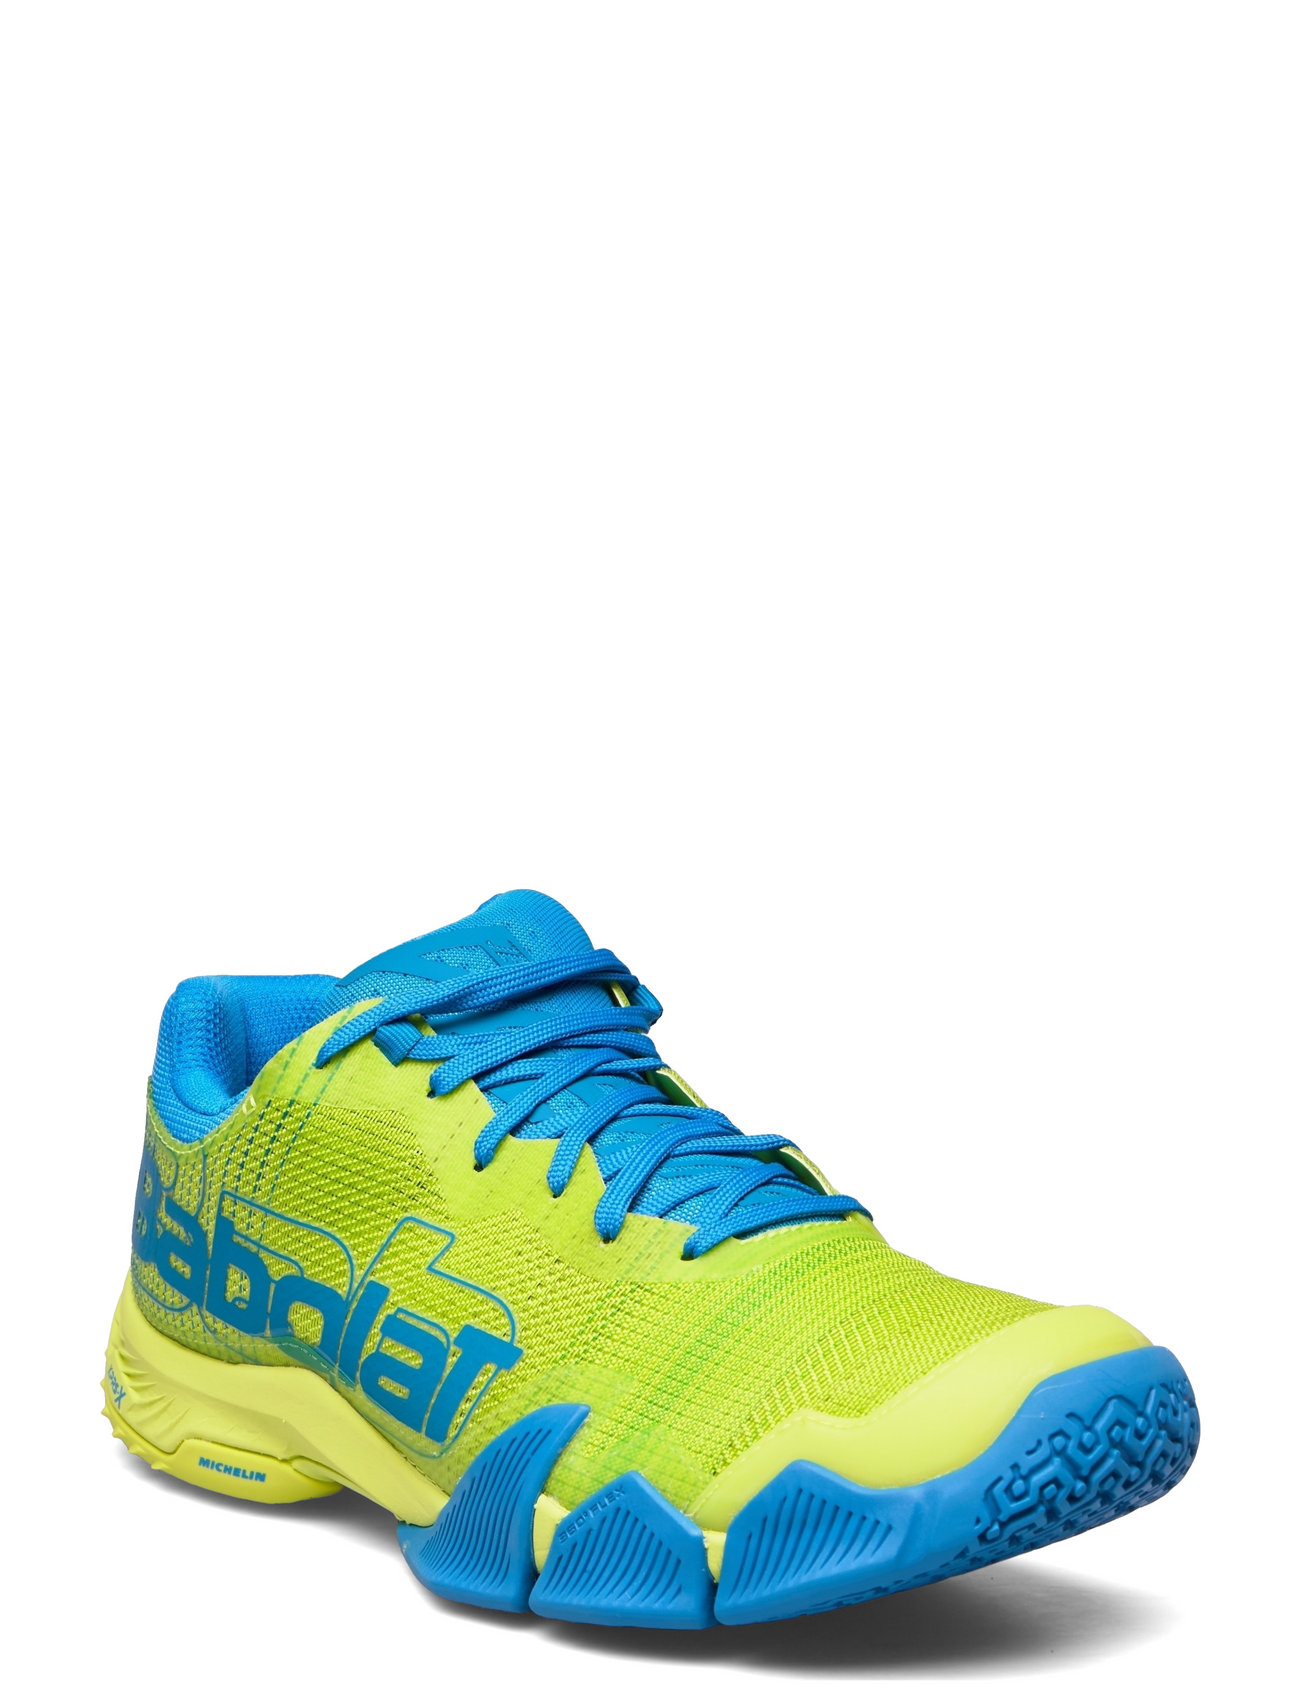 Jet Premura Men Padel Tennis Shoe Shoes Sport Shoes Racketsports Shoes Multi/mönstrad Babolat